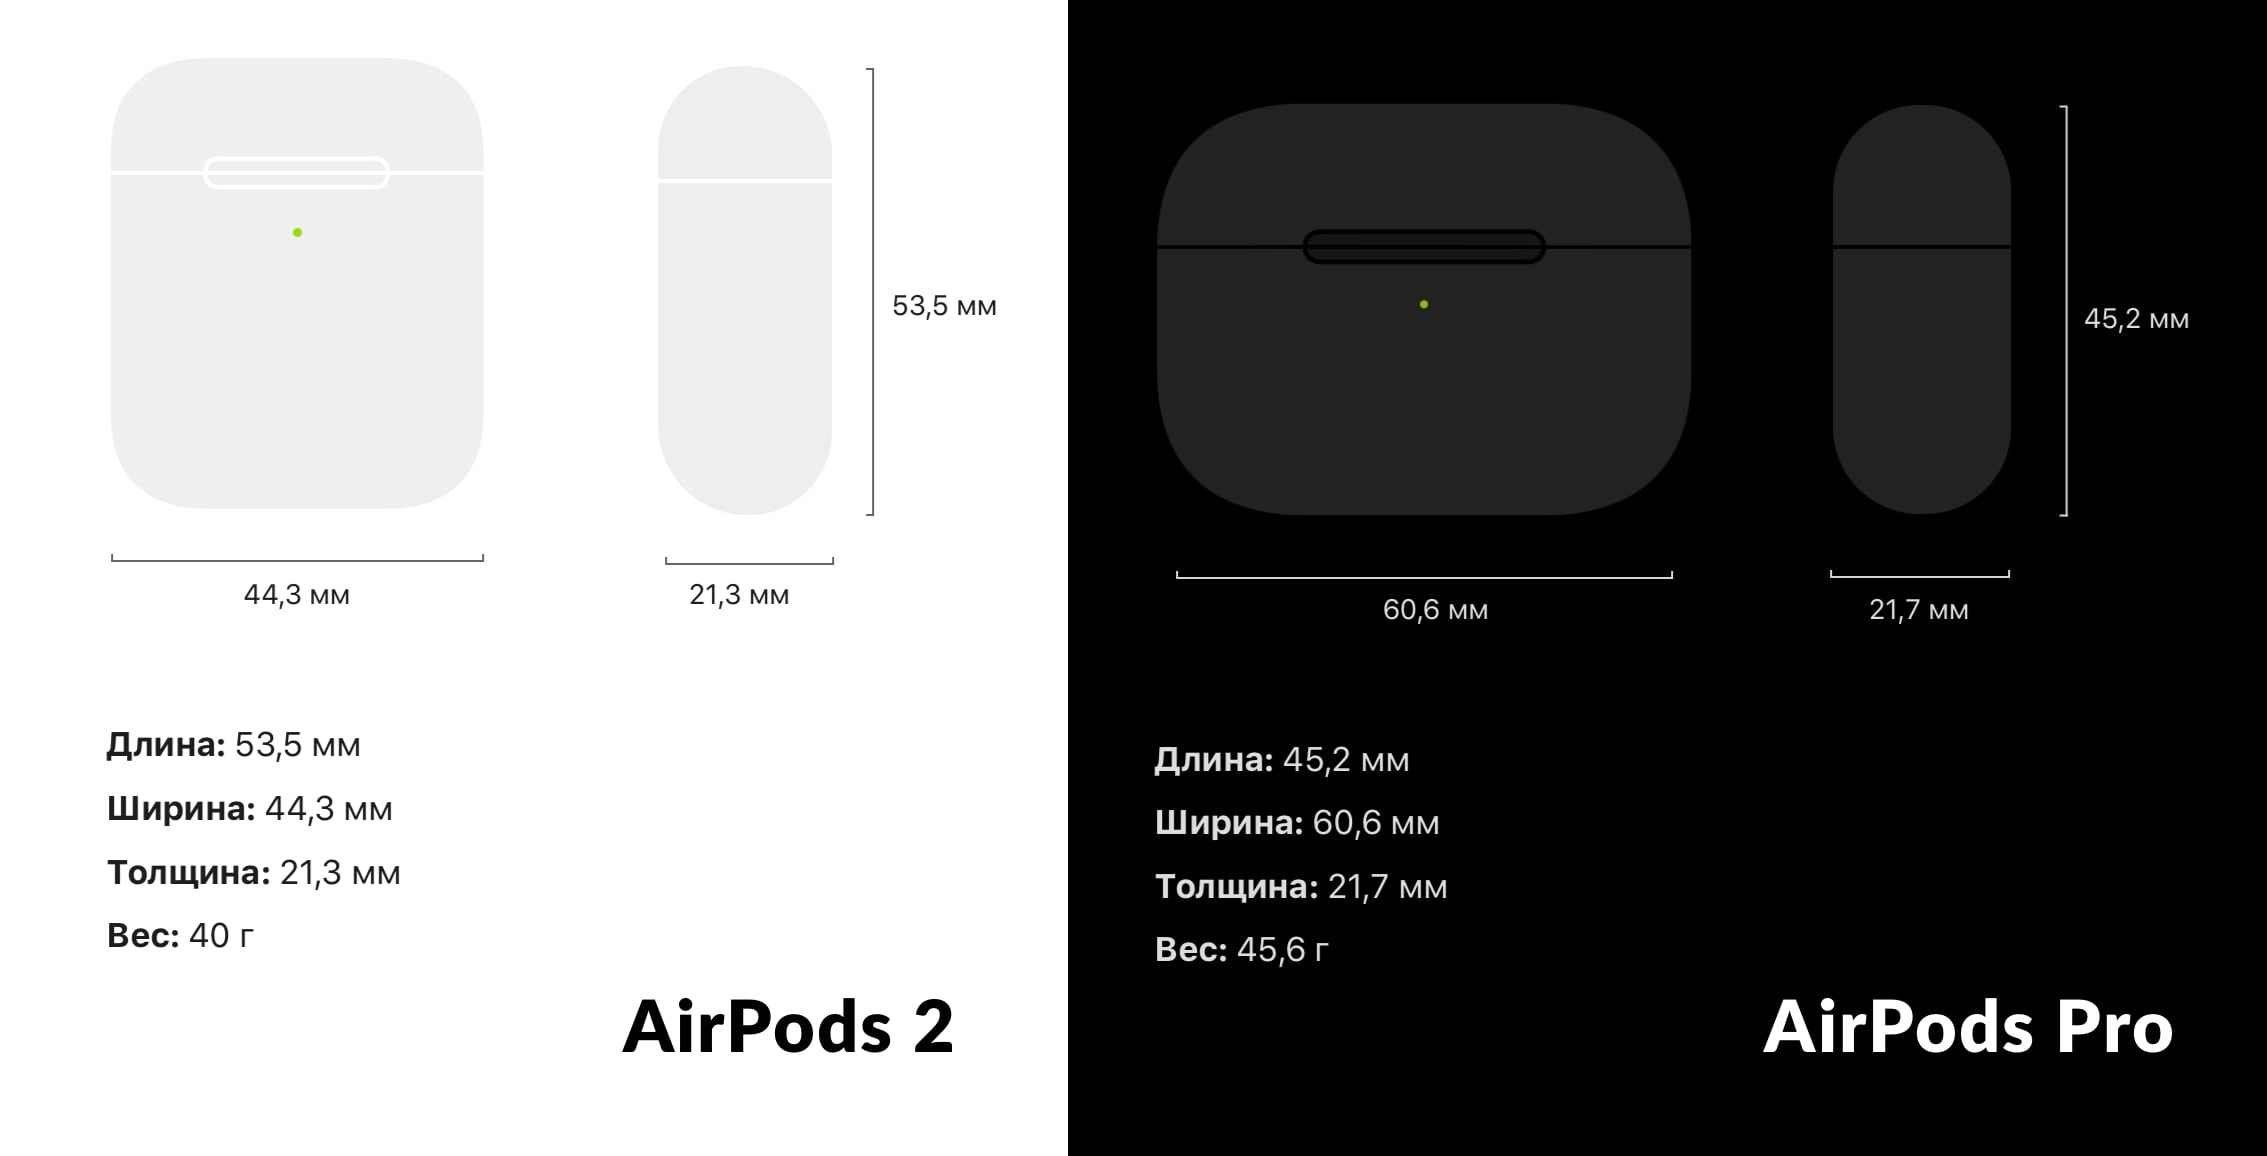 Размер кейса airpods. Габариты кейса Apple AIRPODS. Размеры кейса AIRPODS 1/2. Apple AIRPODS 2 габариты. Габариты AIRPODS Pro 1 и AIRPODS Pro 2.